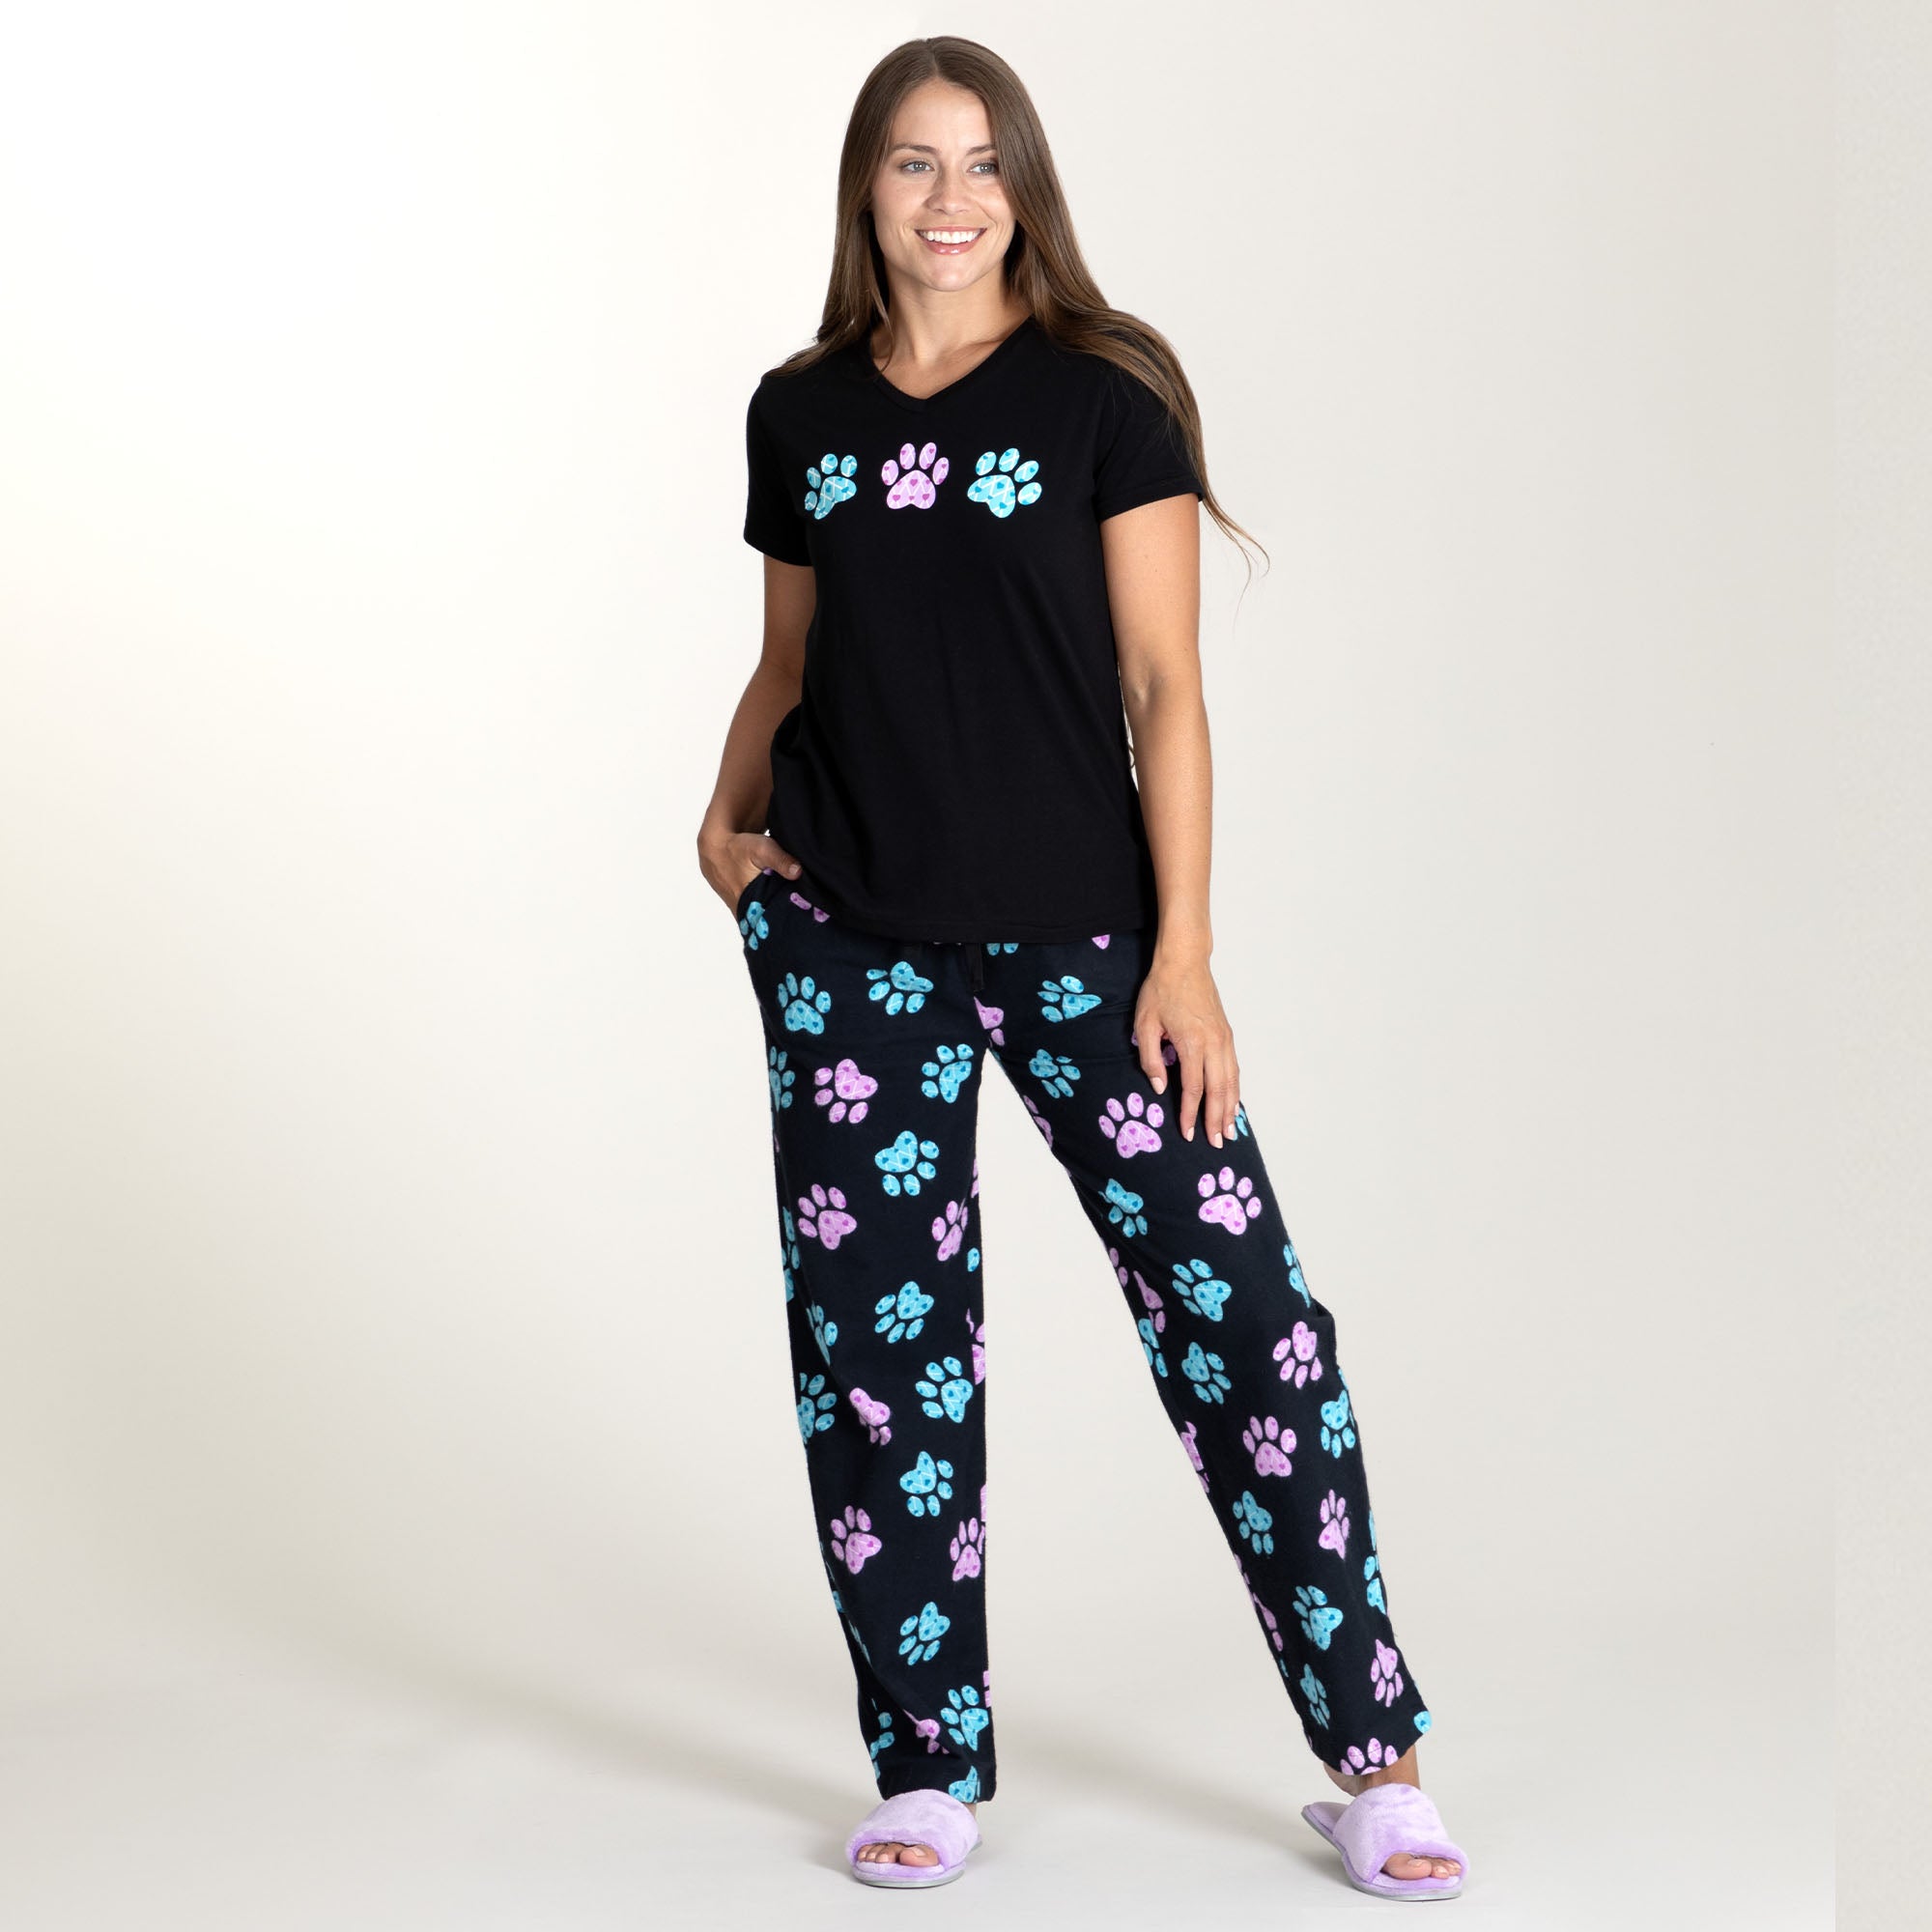 Argyle Paws Flannel Pajama Set - S